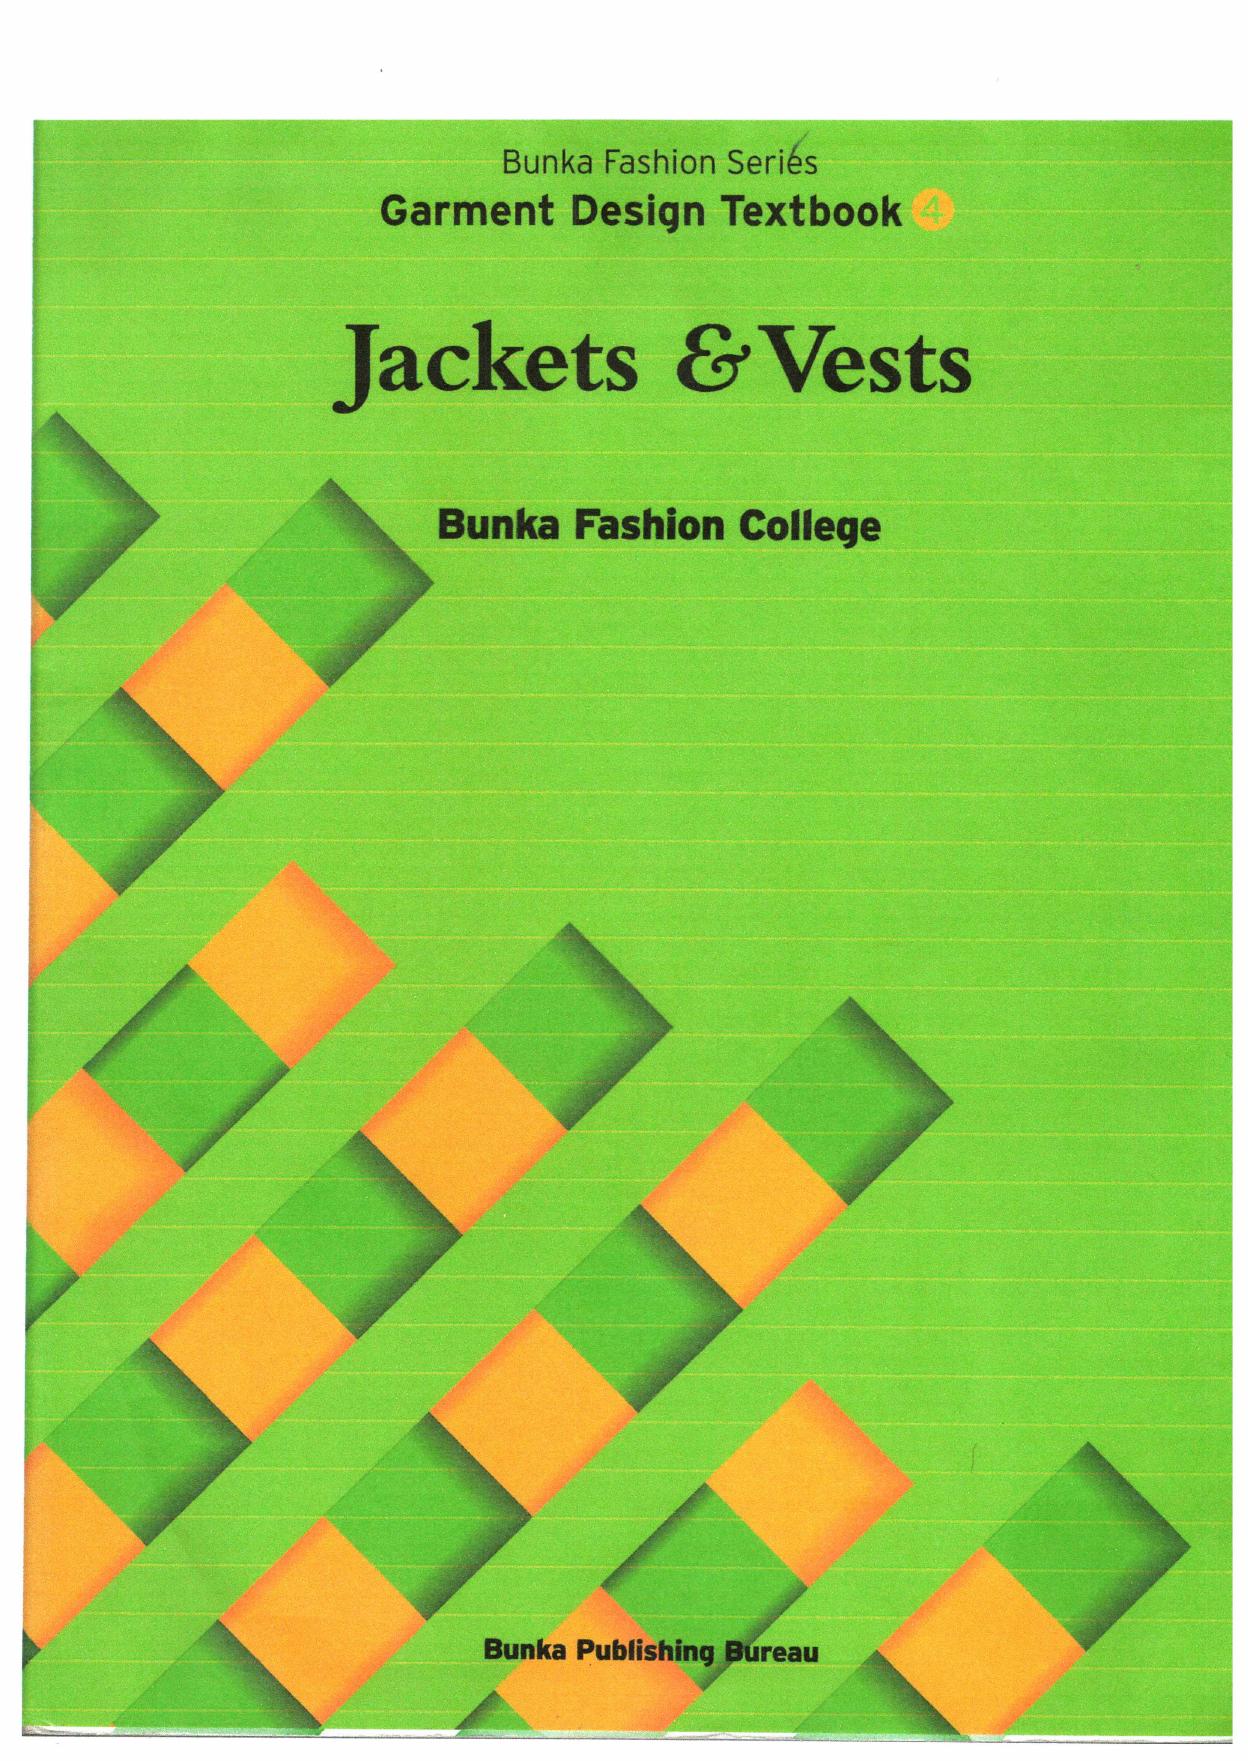 Bunka Fashion Series Garment Design Textbook 4 - Jackets & Vests by unknow